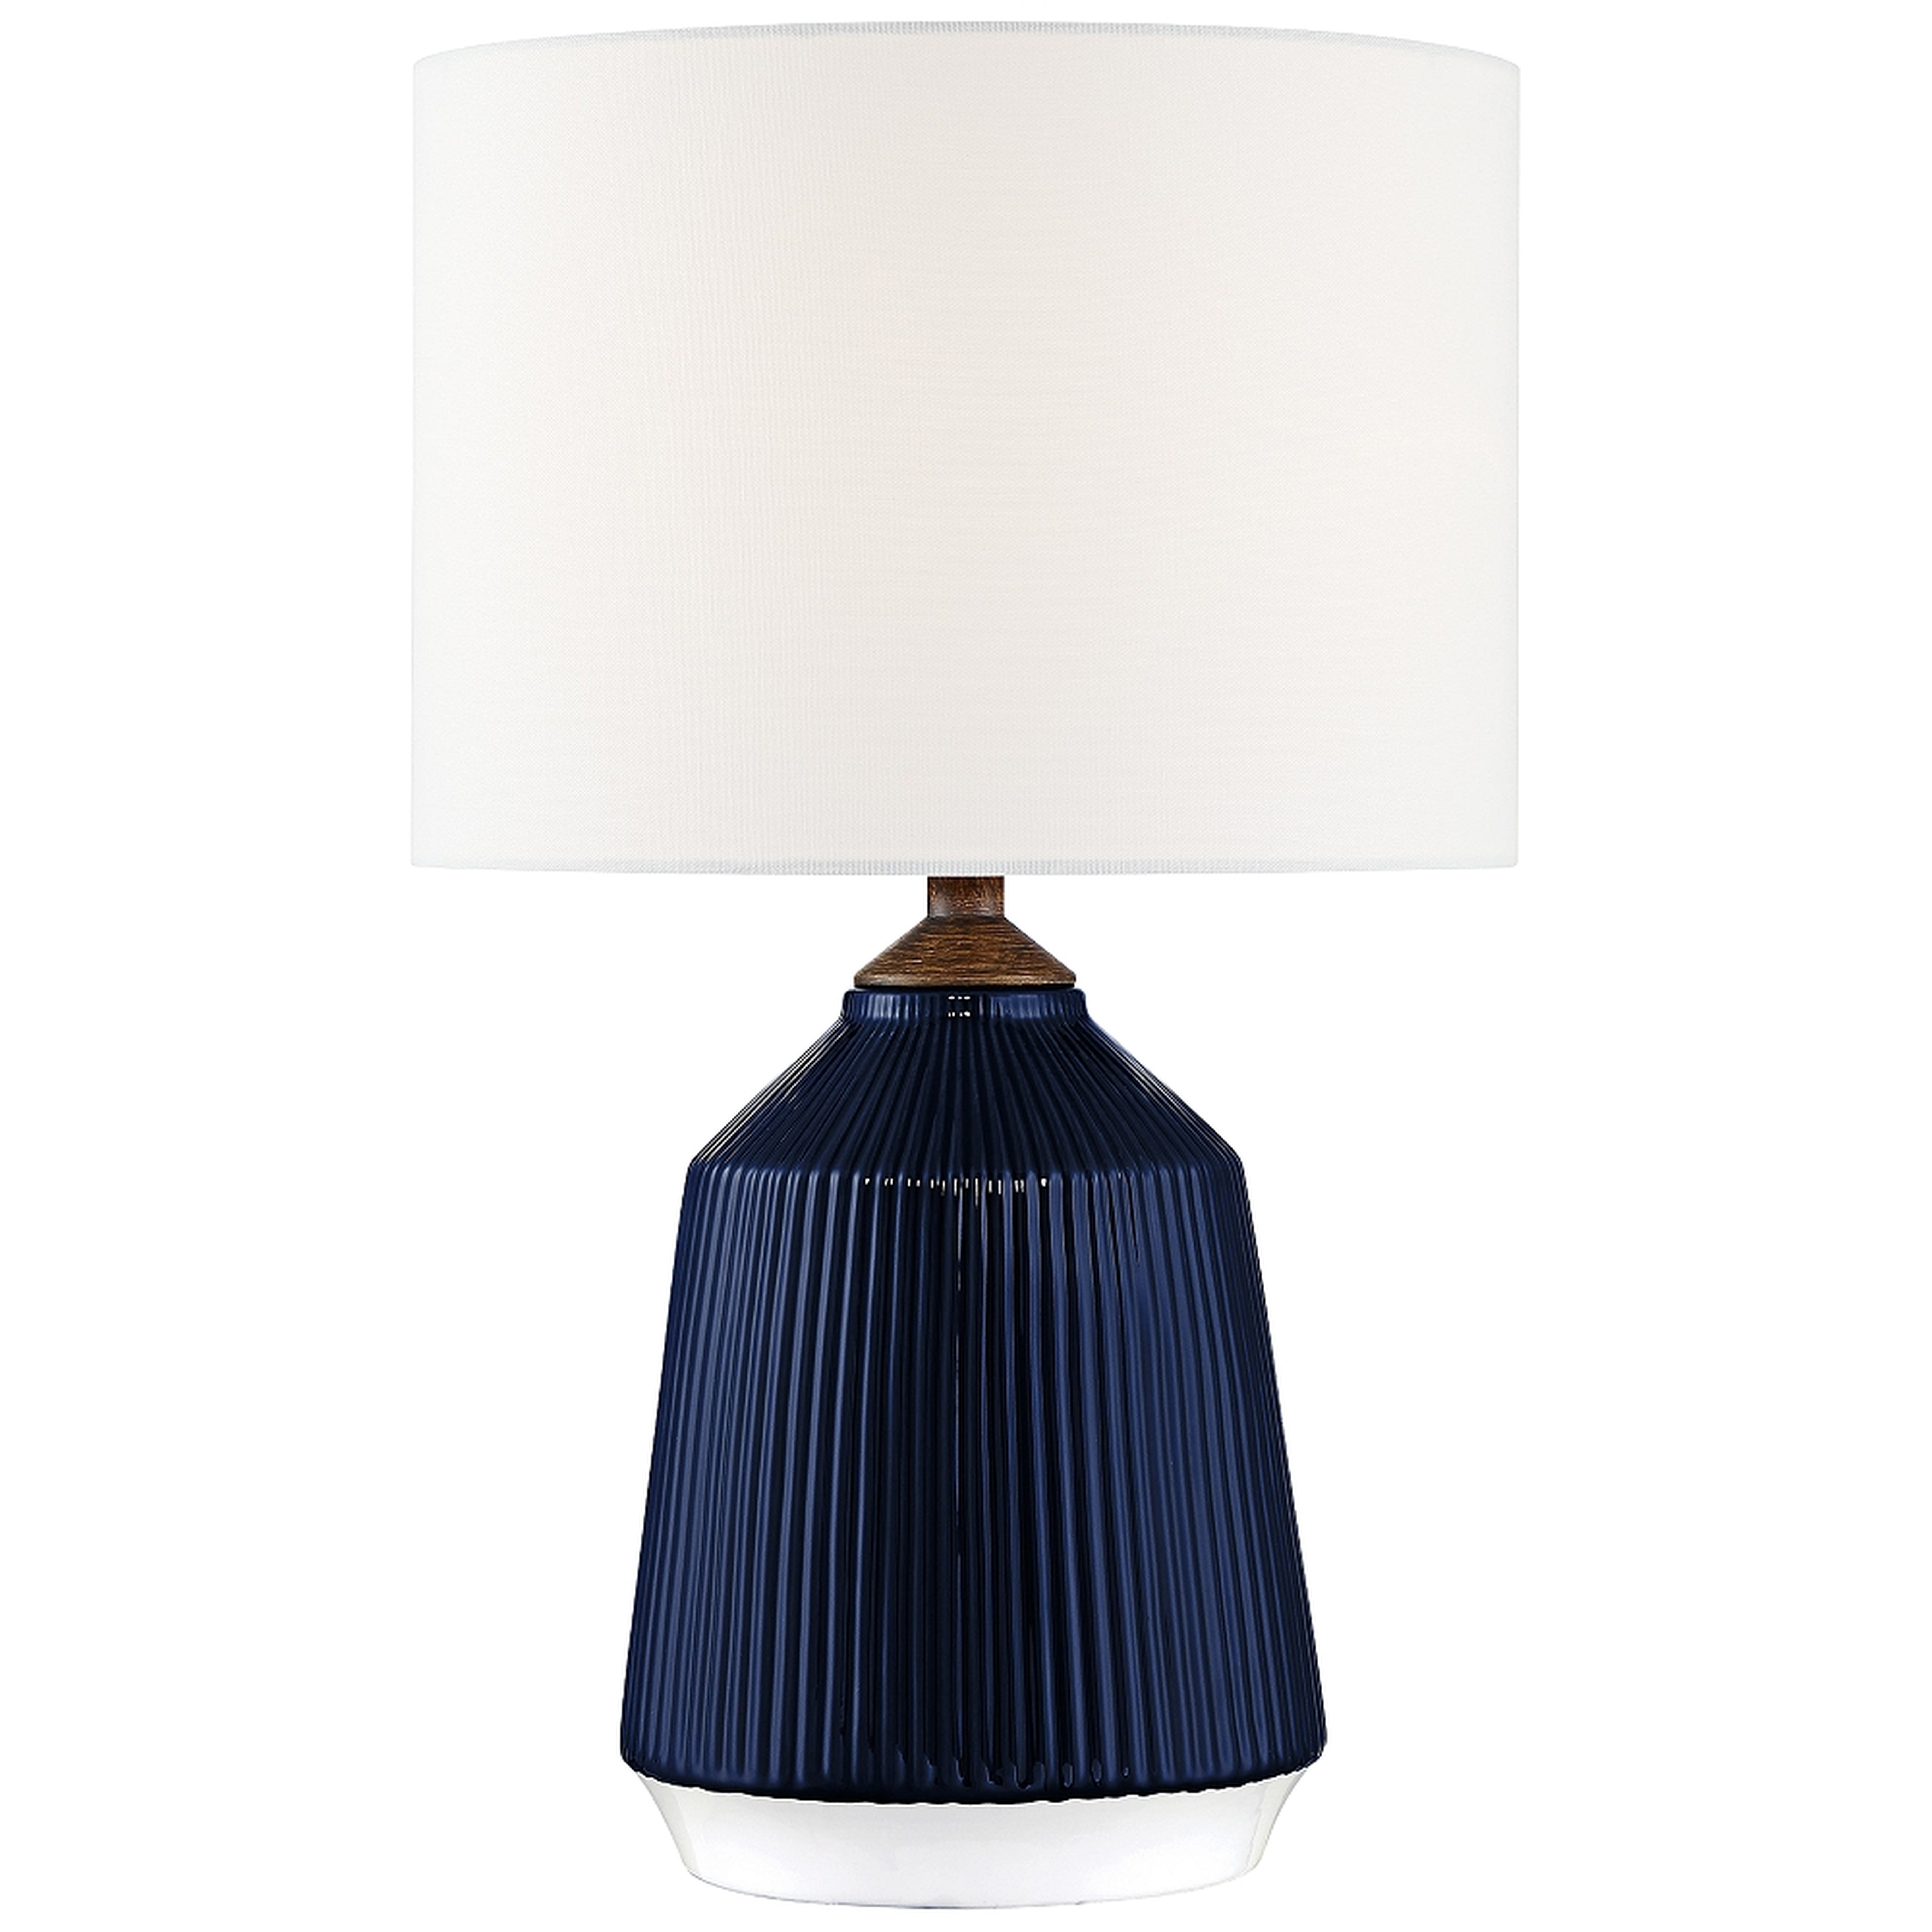 Lite Source Saratoga Blue Ceramic Striped Accent Table Lamp - Style # 69R50 - Lamps Plus